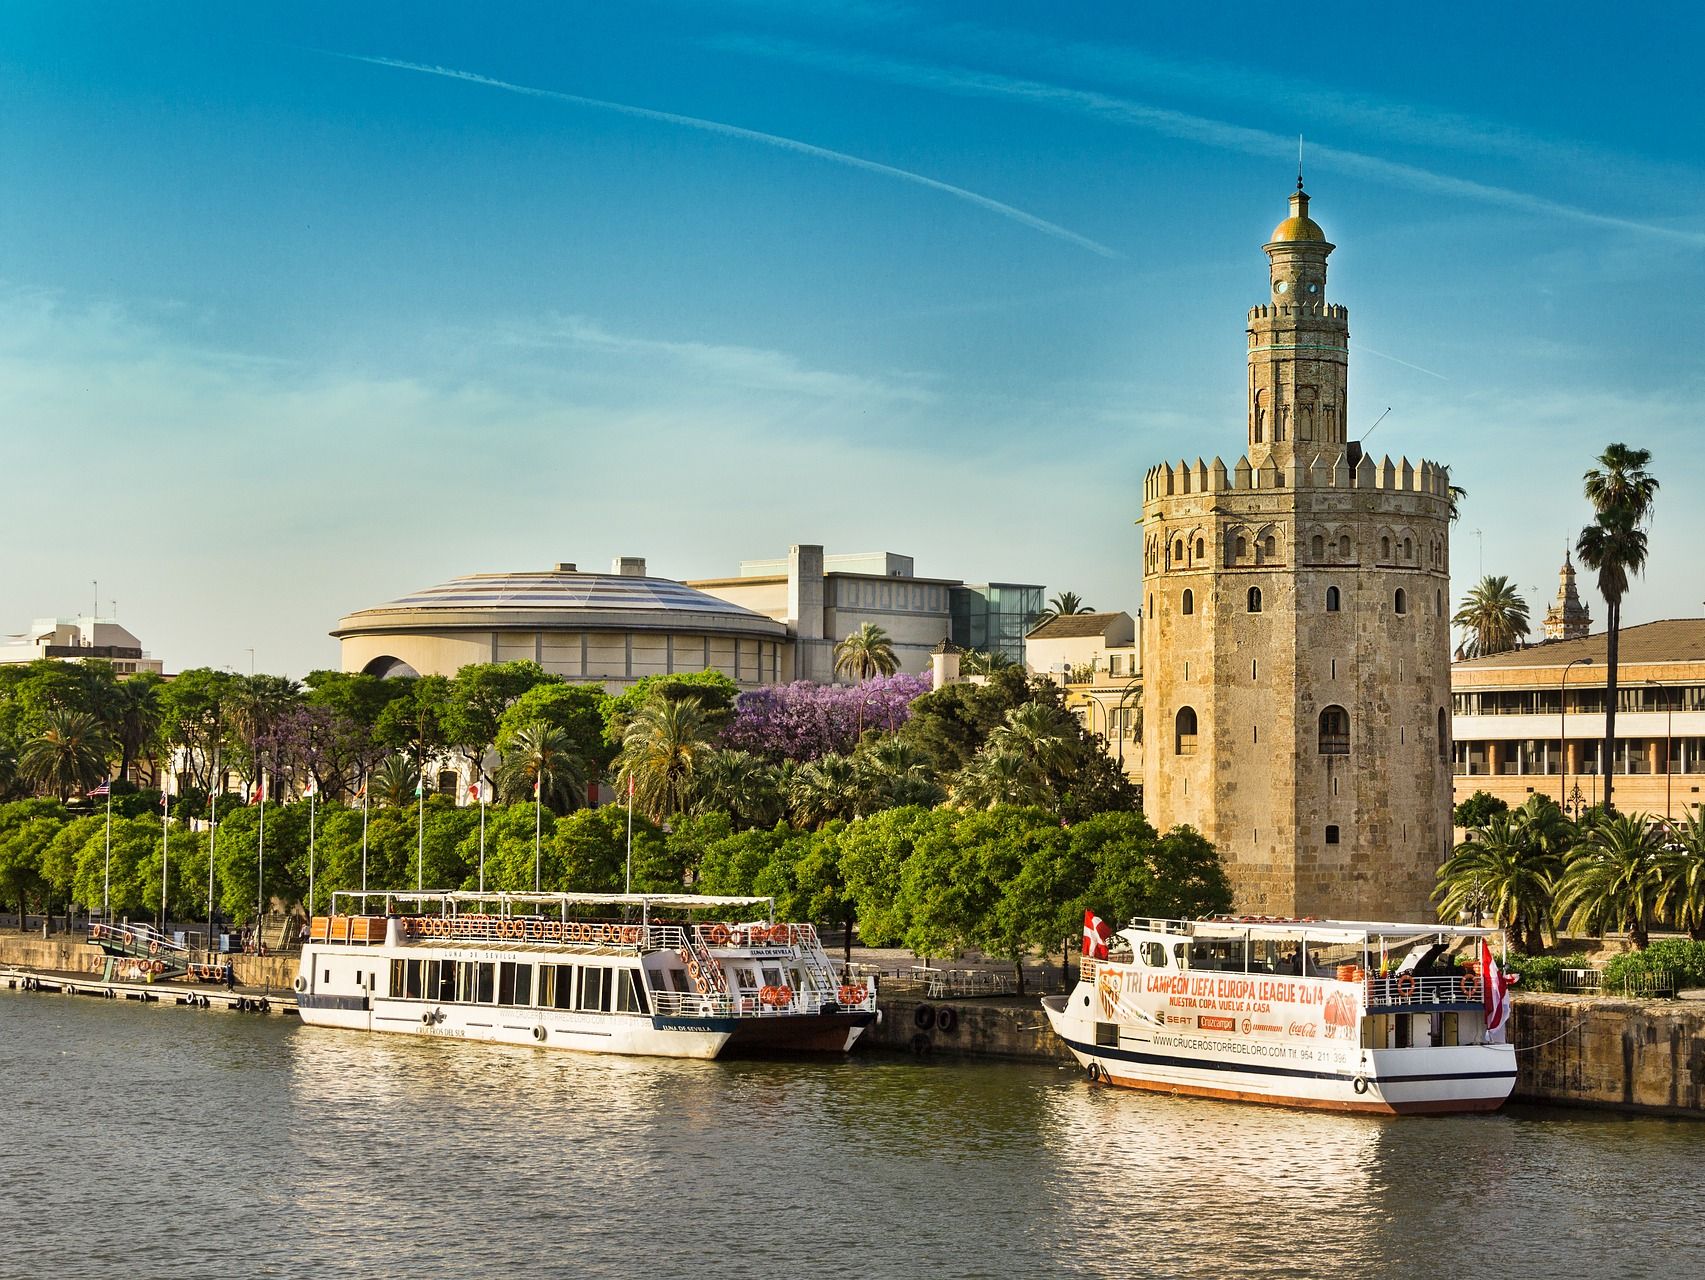 De gouden toren in Sevilla - Spanje fly drive -  Andalusië rondreis